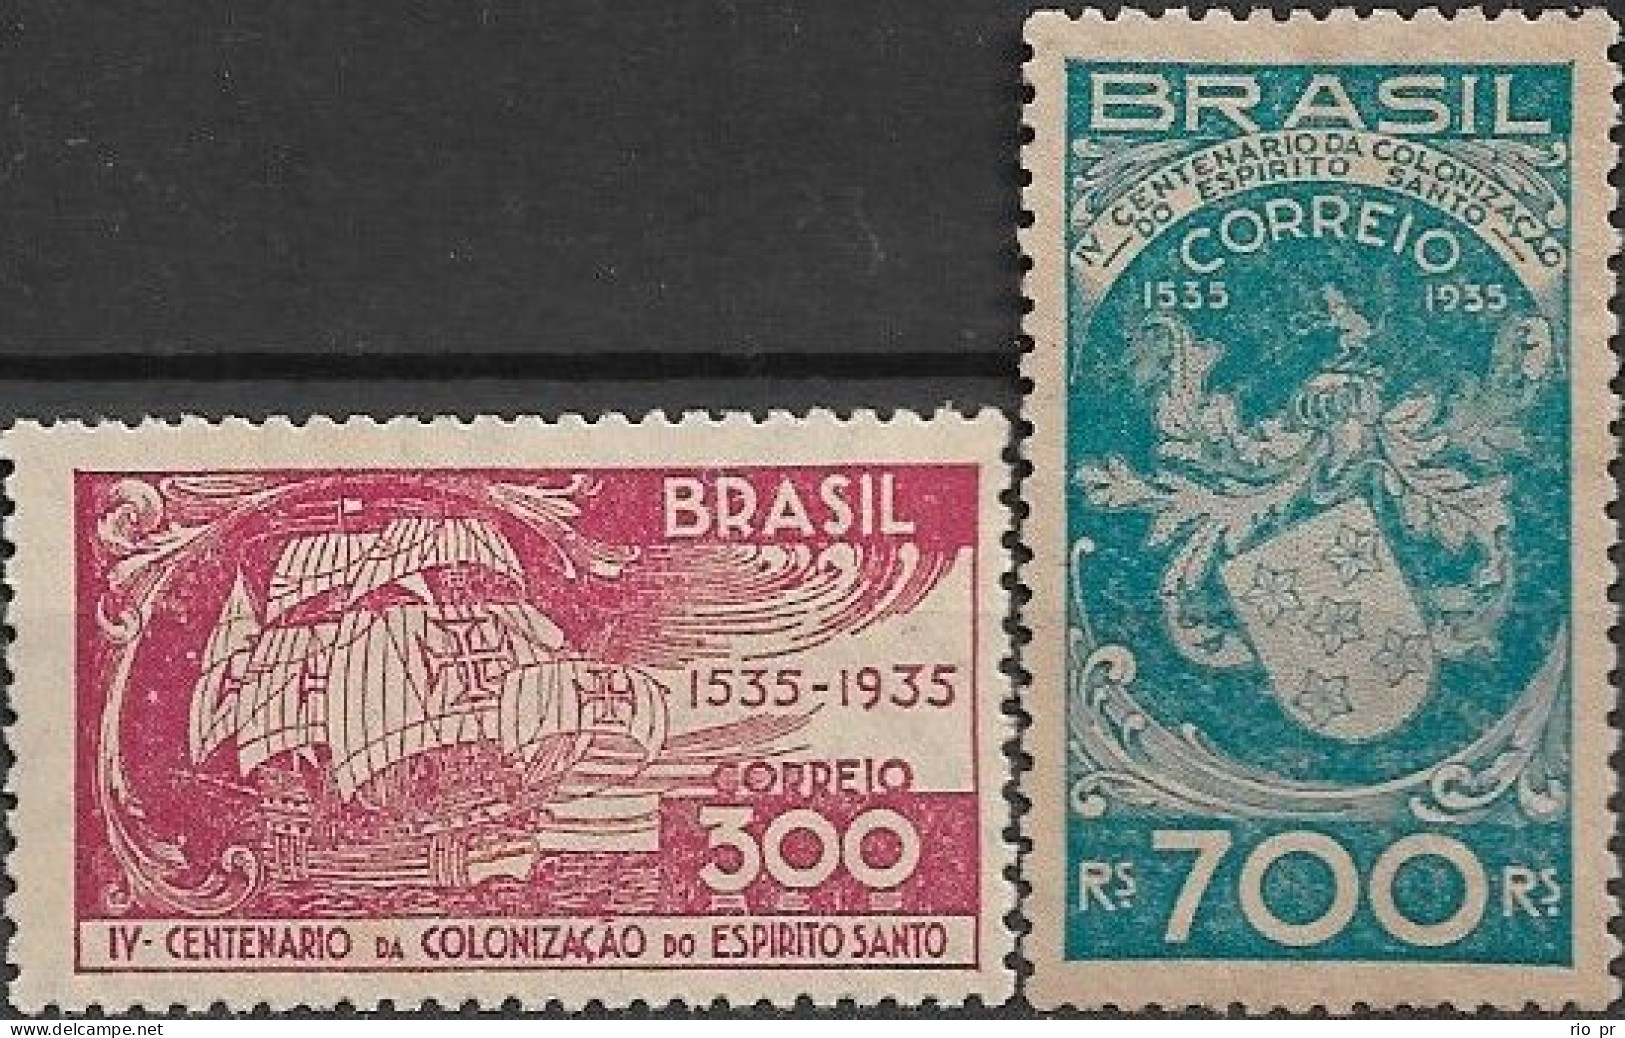 BRAZIL - COMPLETE SET 4th CENTENARY OF THE COLONIZATION OF ESPÍRITO ANTO STATE 1935 - MNH/NEW NO GUM - Ongebruikt